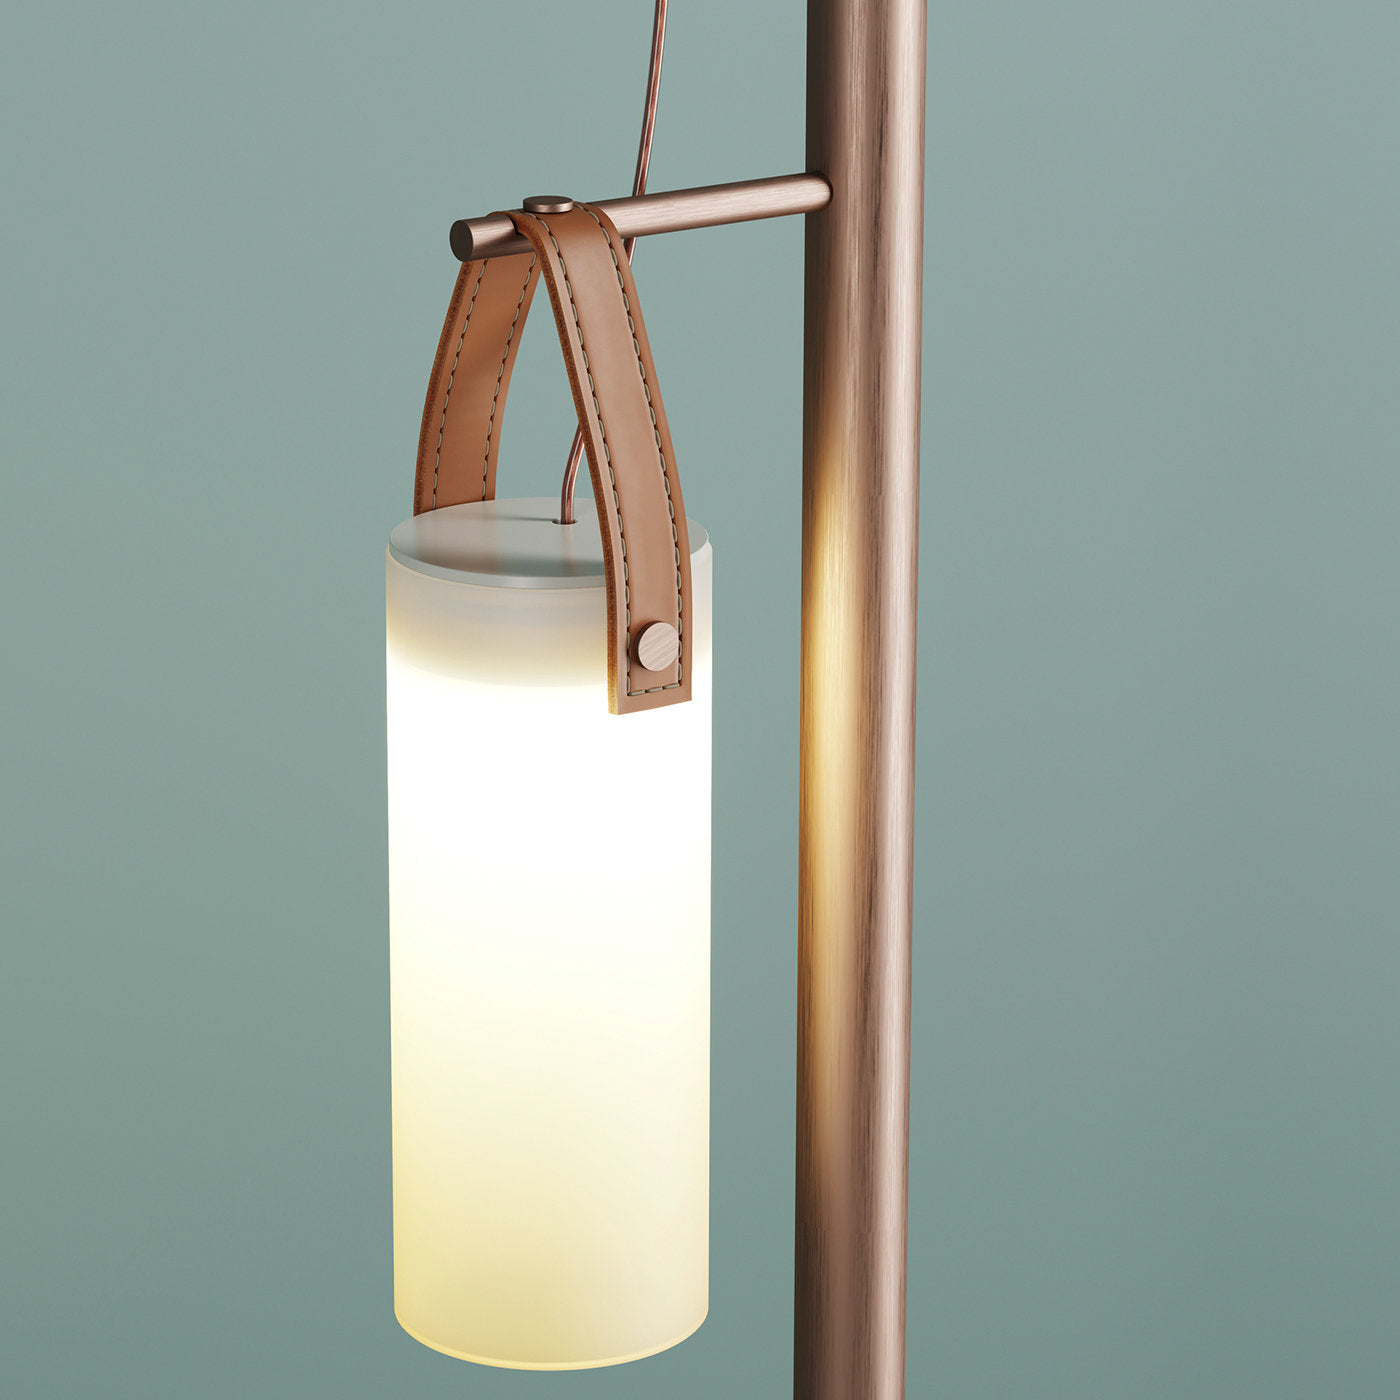 Galerie 3-Diffuser Floor Lamp by Federico Peri - Alternative view 1